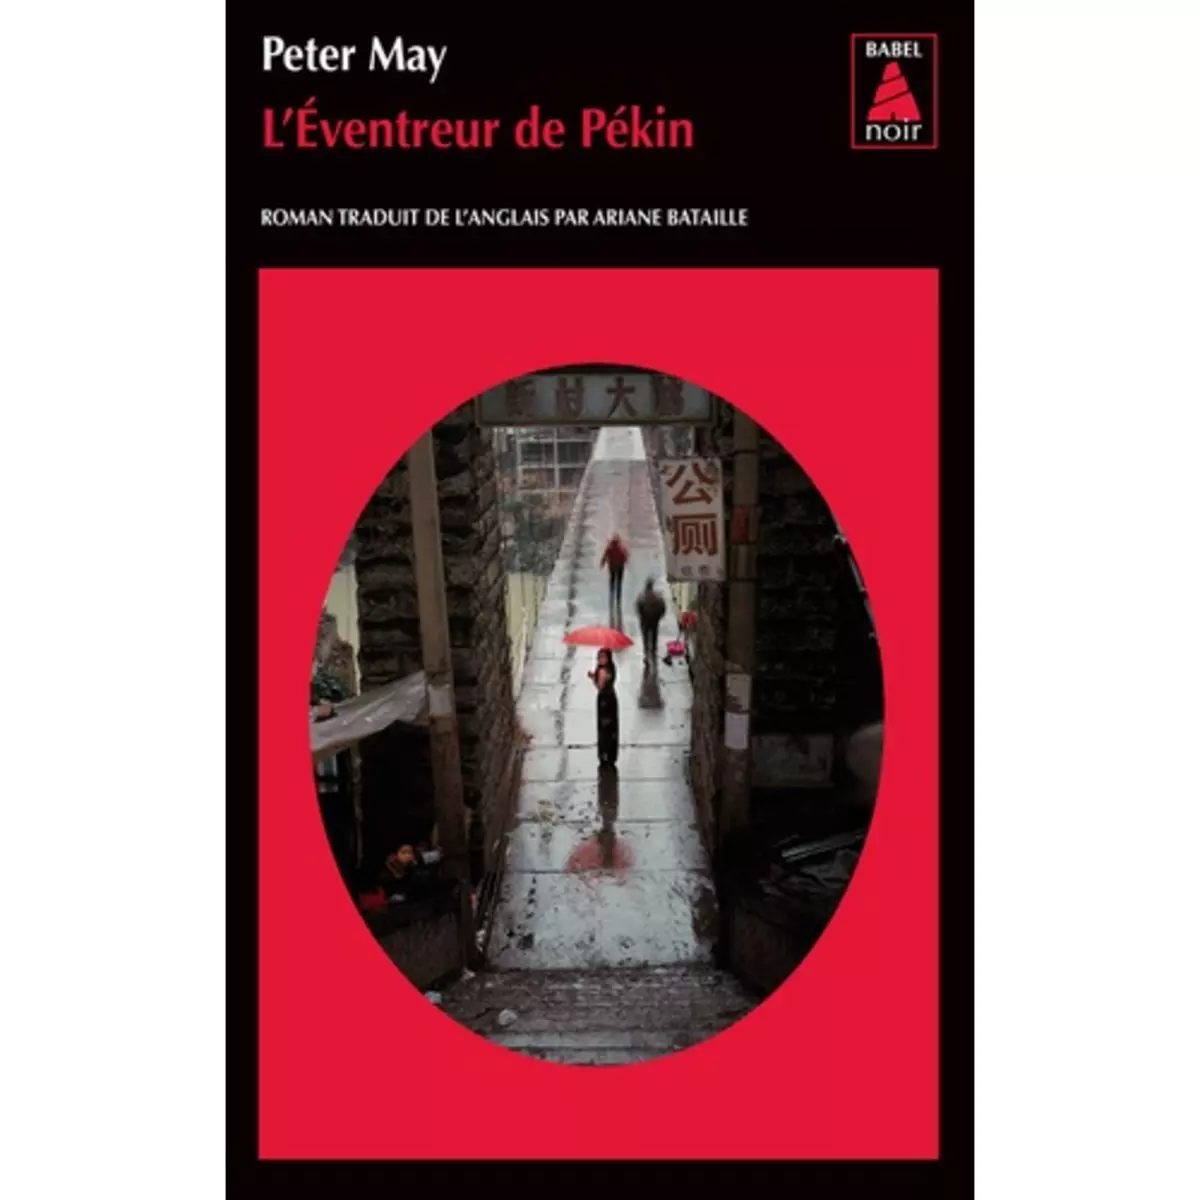  L'EVENTREUR DE PEKIN, May Peter